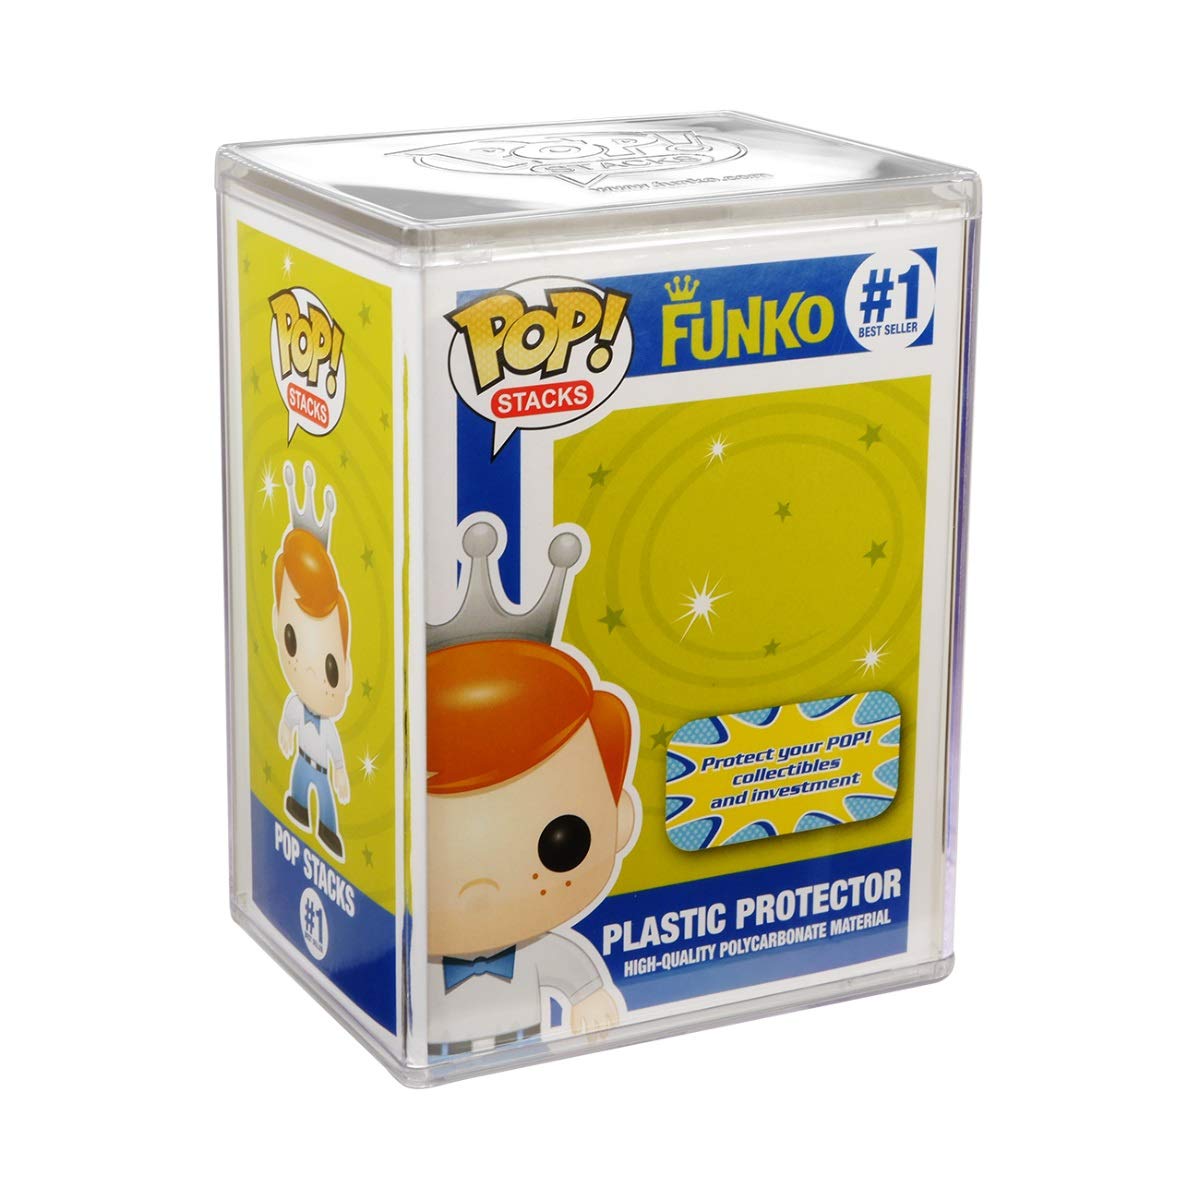 Funko POP! Stacks Plastic Protector, Standard Packaging